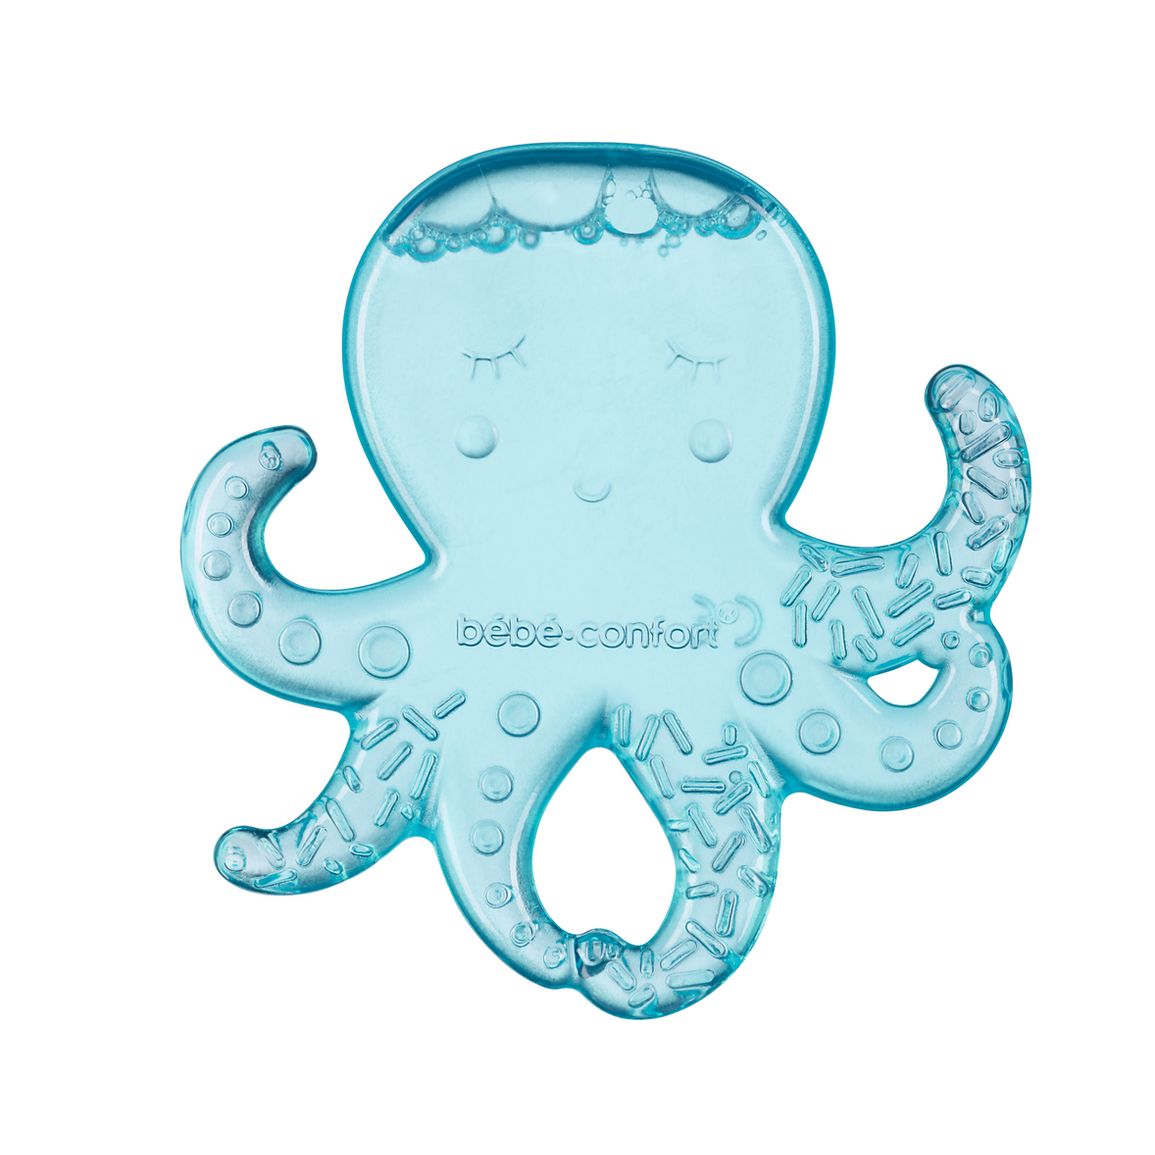 Chladiace hryzátko chobotnice Blue